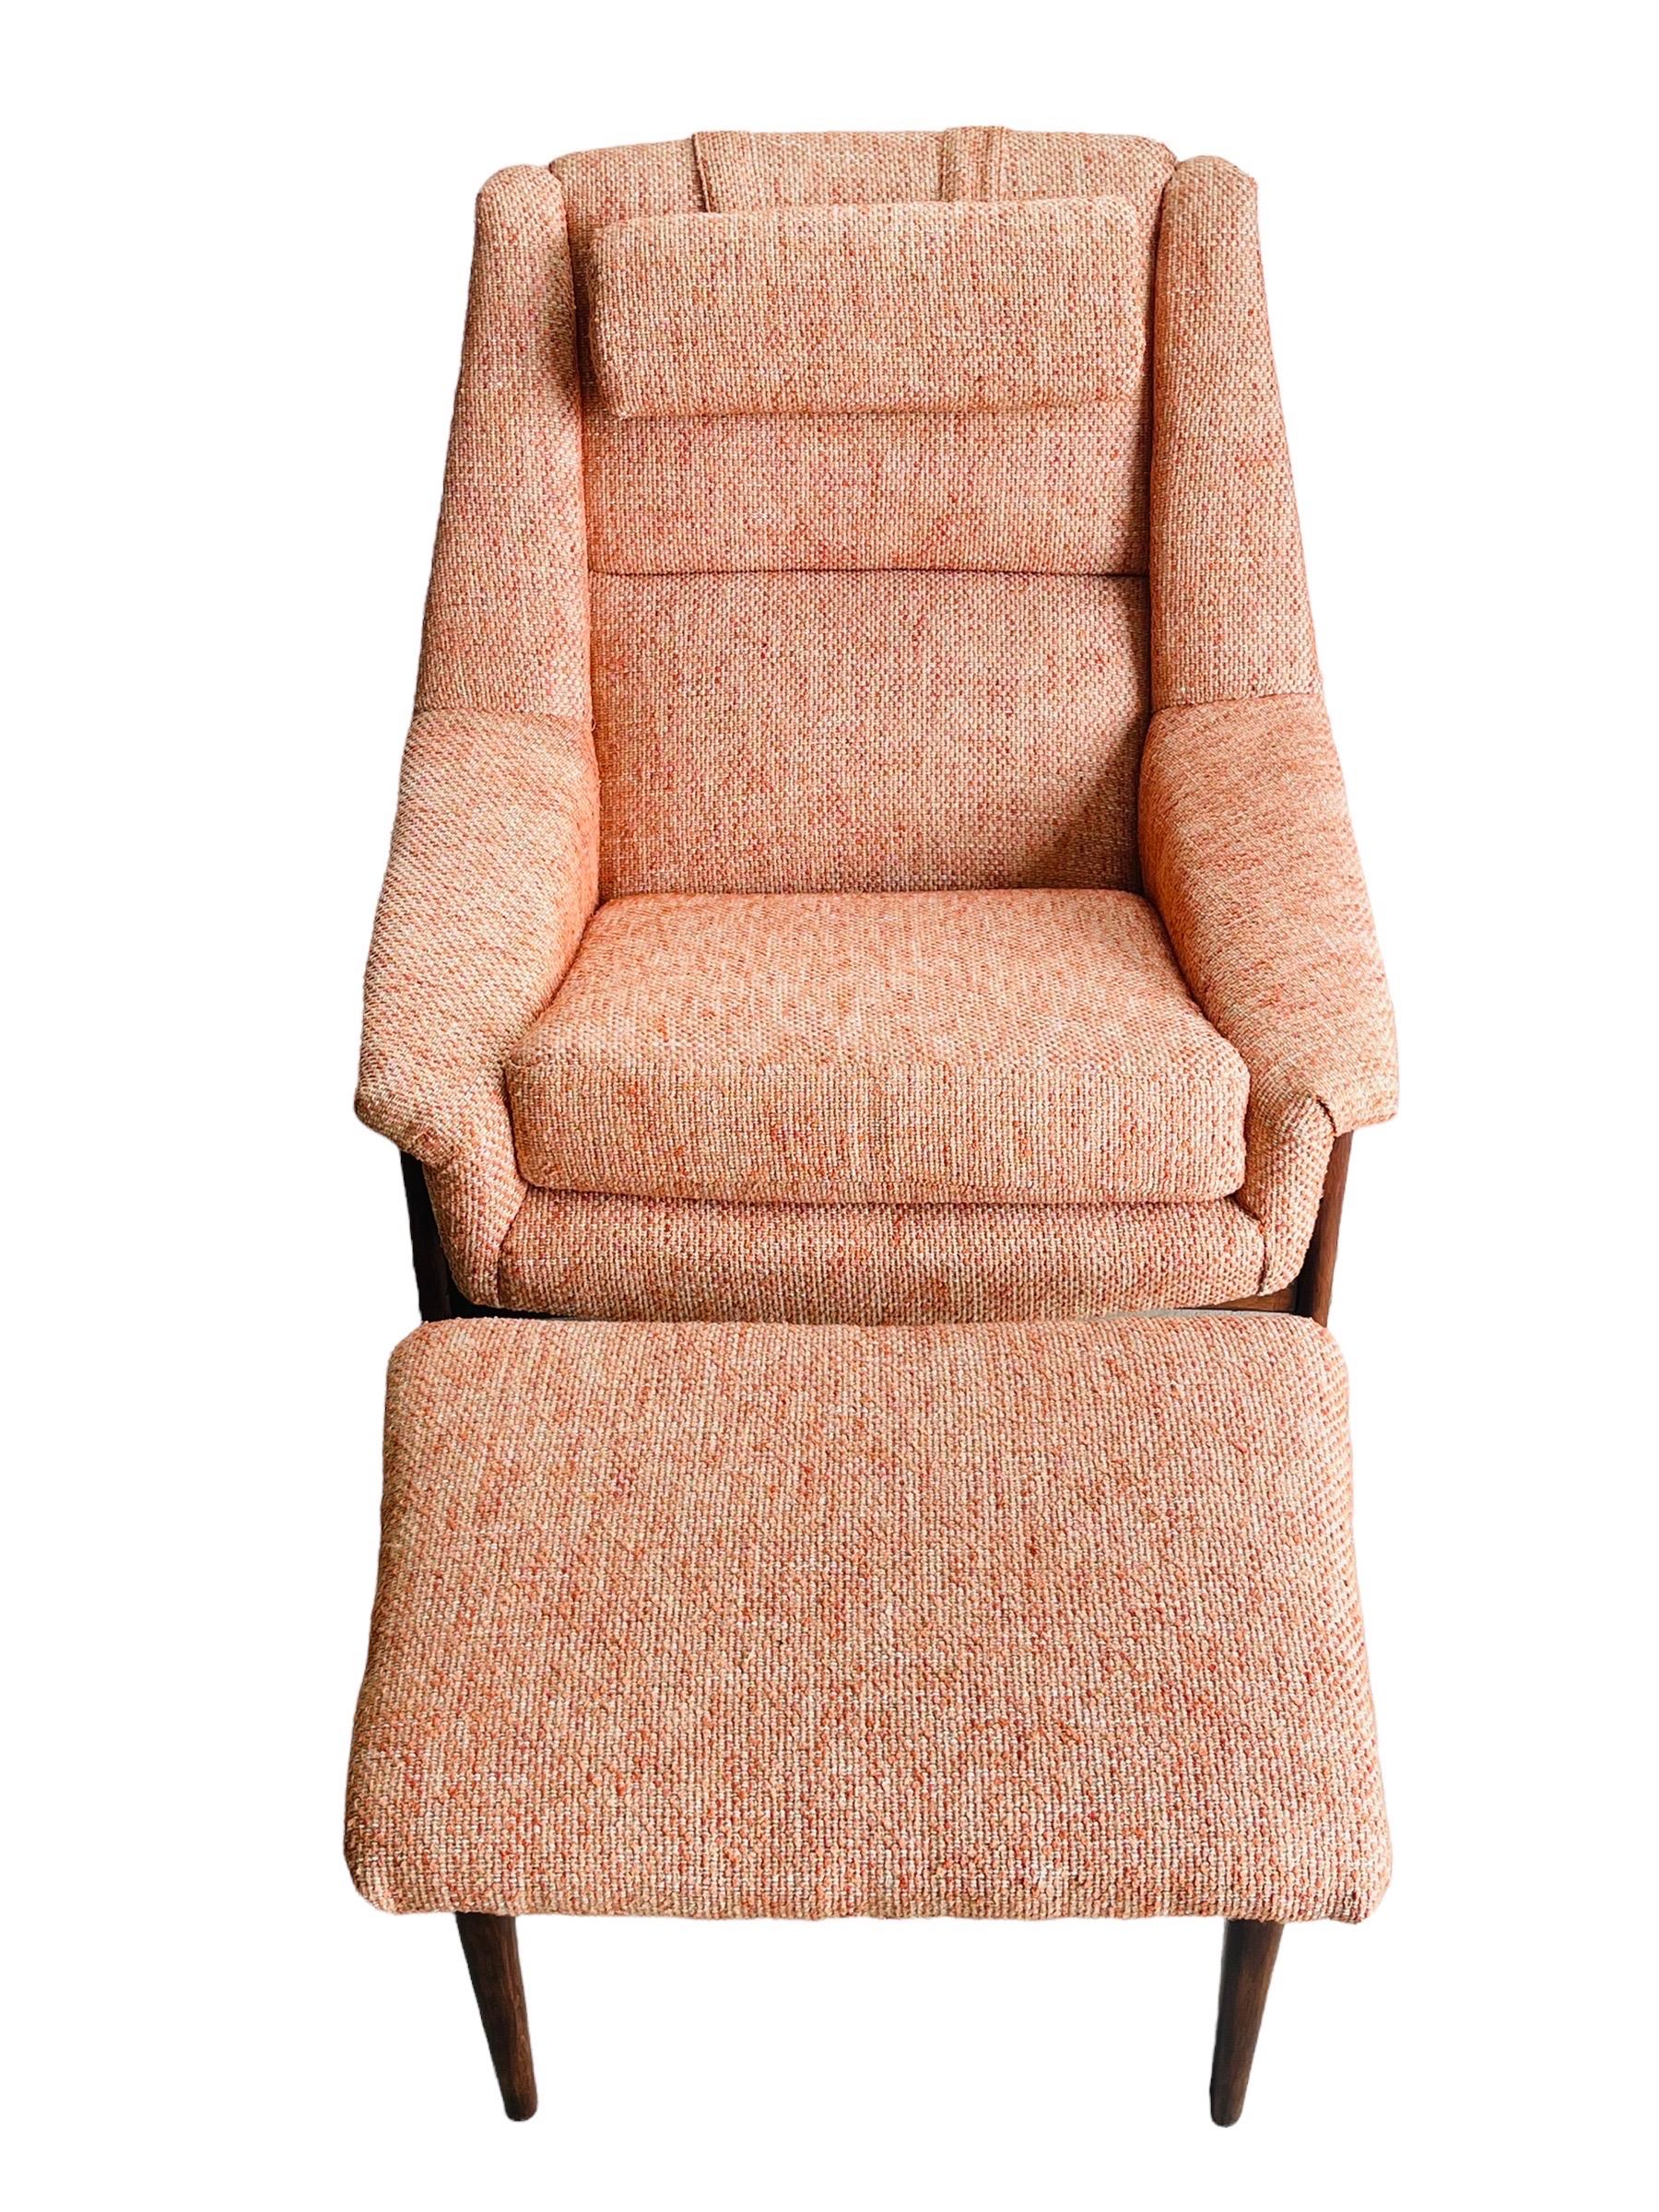 20th Century Folke Ohlsson Walnut Lounge Chair & Ottoman for DUX